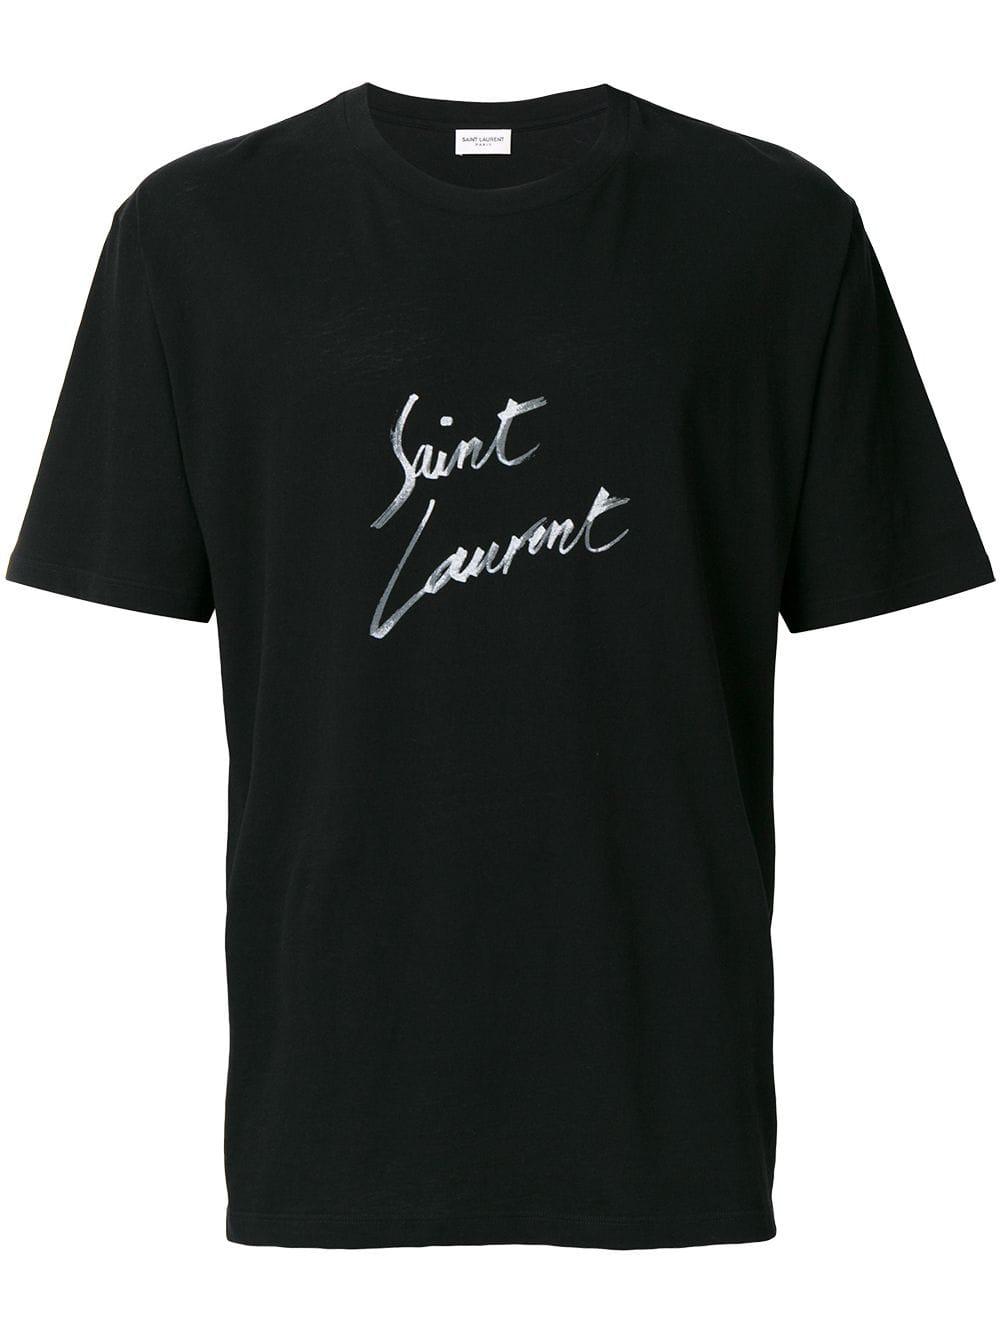 Saint Laurent Cotton Oversized Signature T-shirt in Black for Men - Lyst